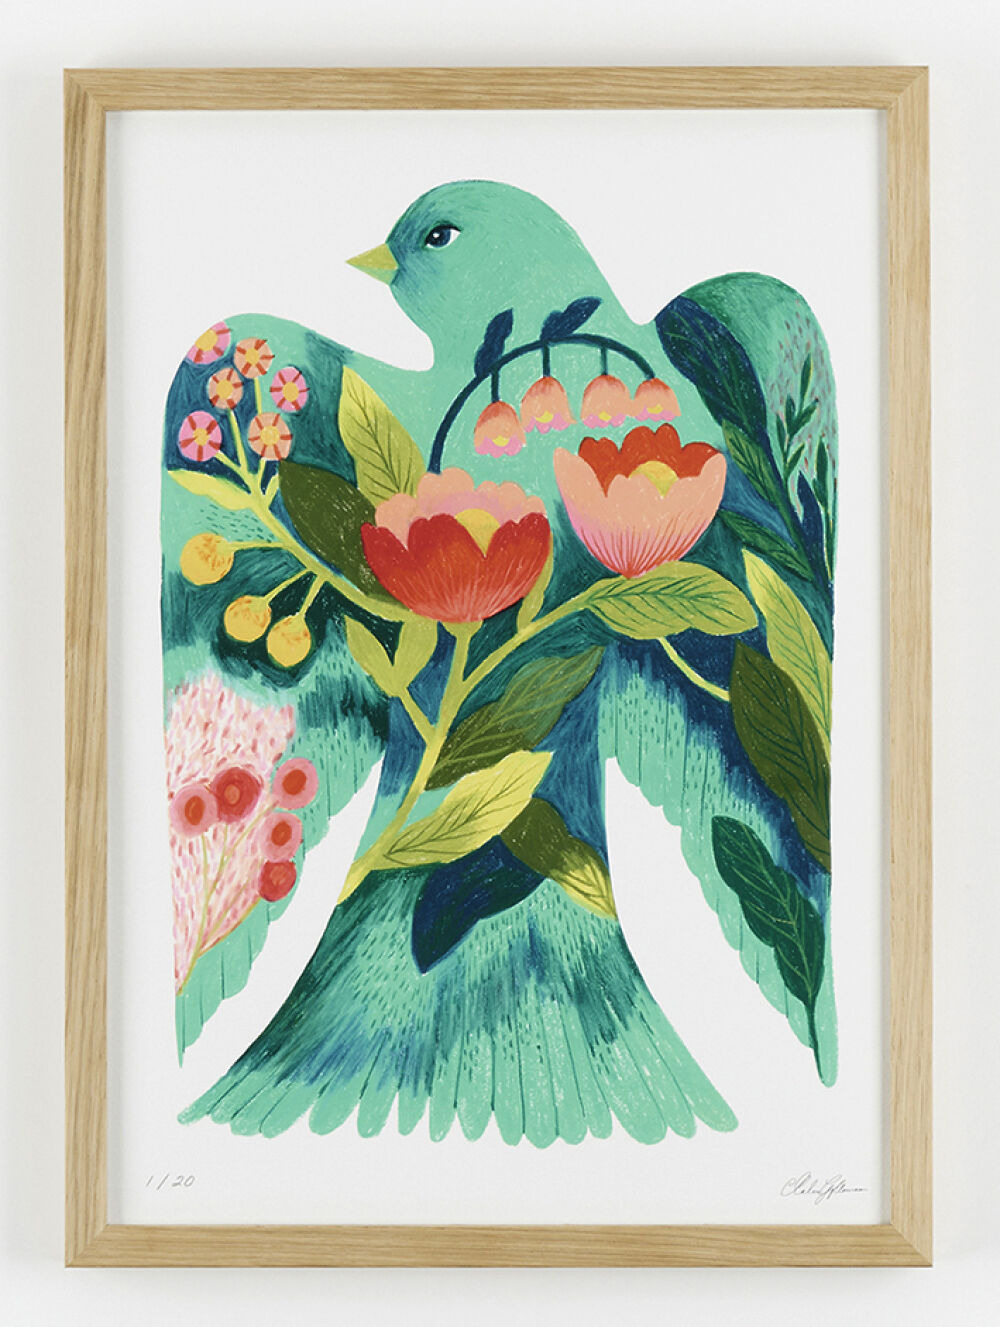 Beautiful bird water color illustration by Malin Gyllensvaan